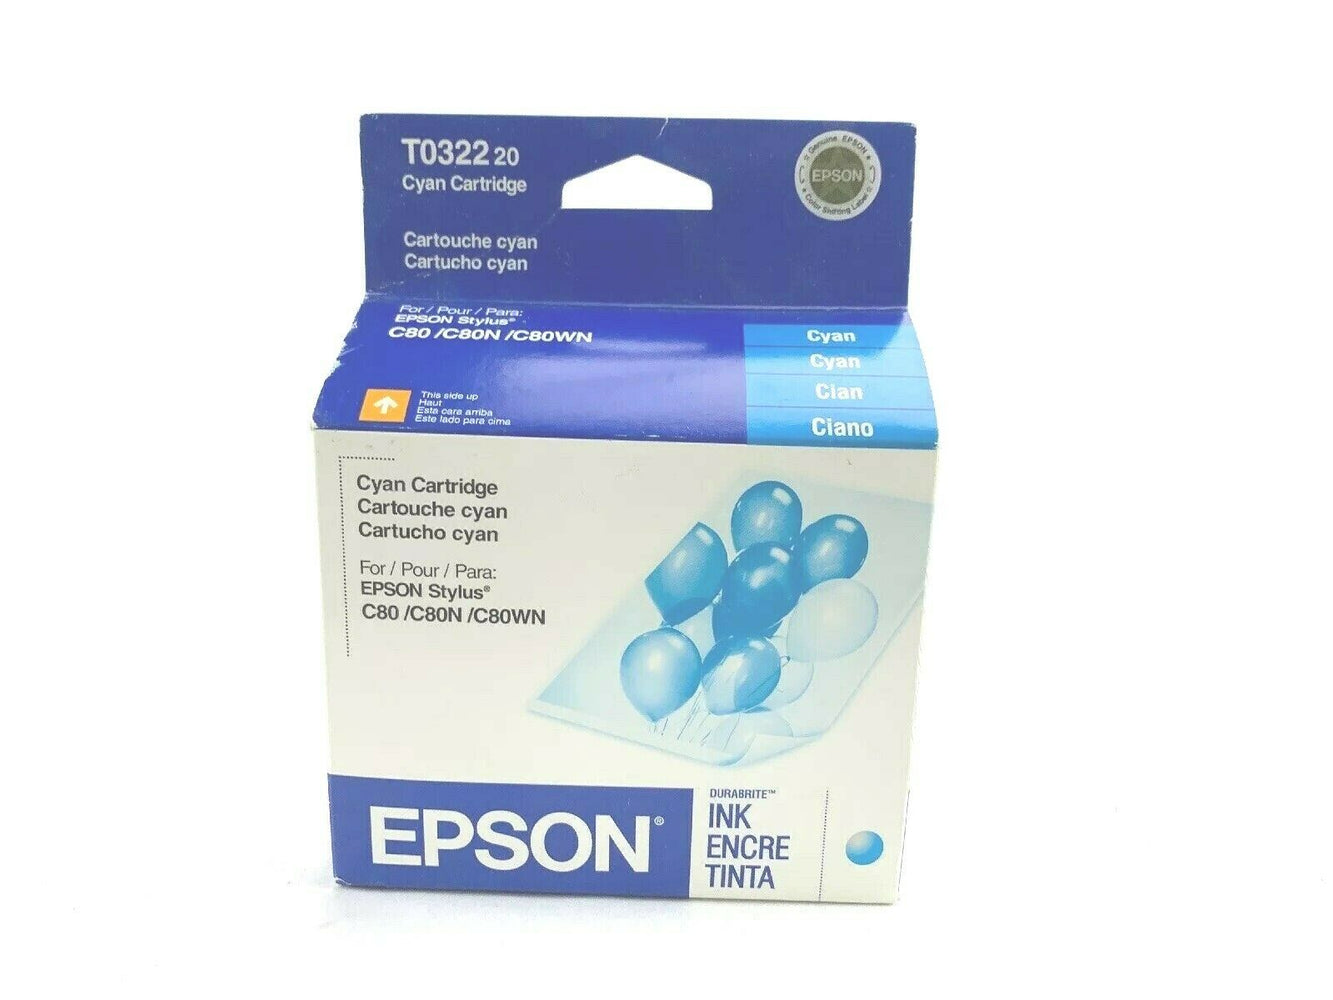 GENUINE Epson T0322 Cyan Printer Ink Cartridge for EPSON Stylus C80/C80N/C80WN